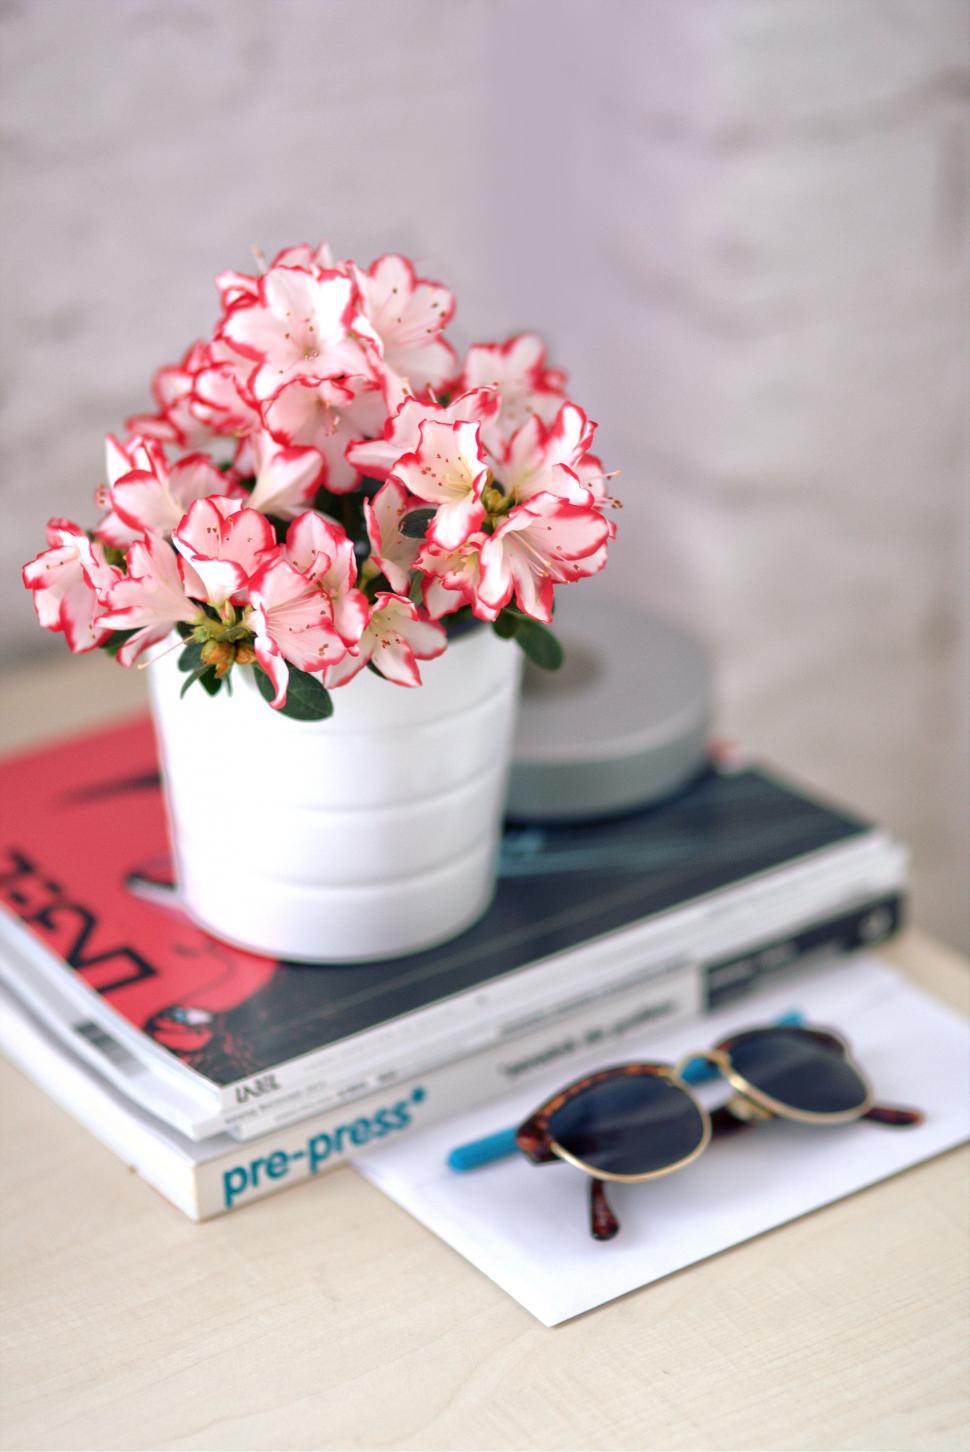 Free Image of Decor Flower Home Interior Plant Pot Sunglasses azalea design houseplants white 